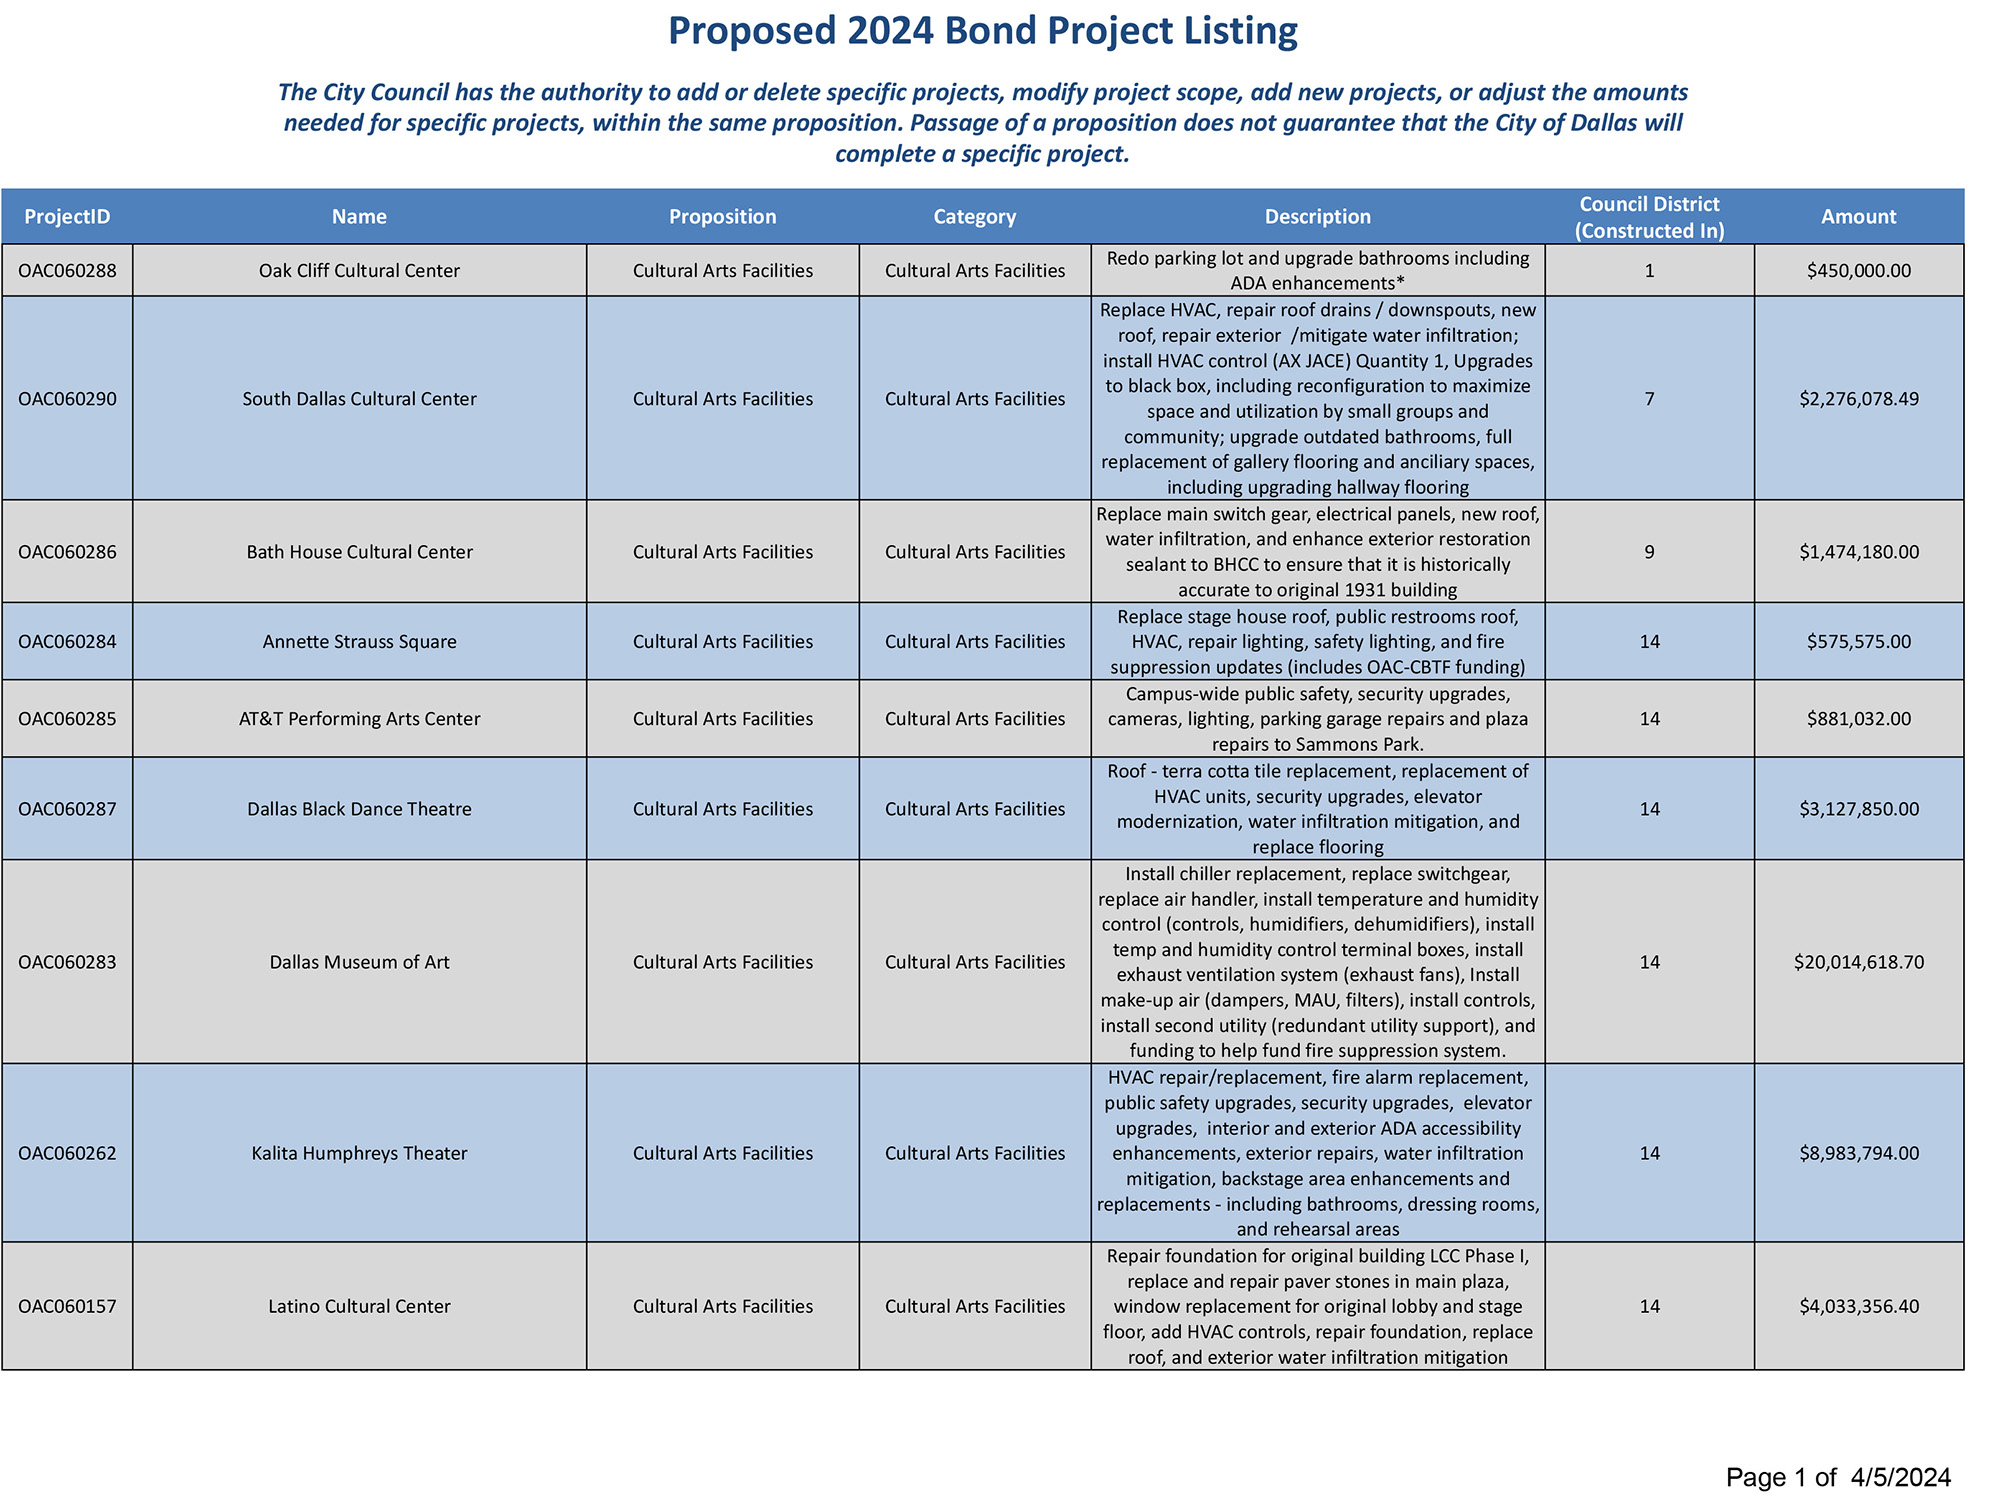 Proposed 2024 Dallas Bond Project Listing